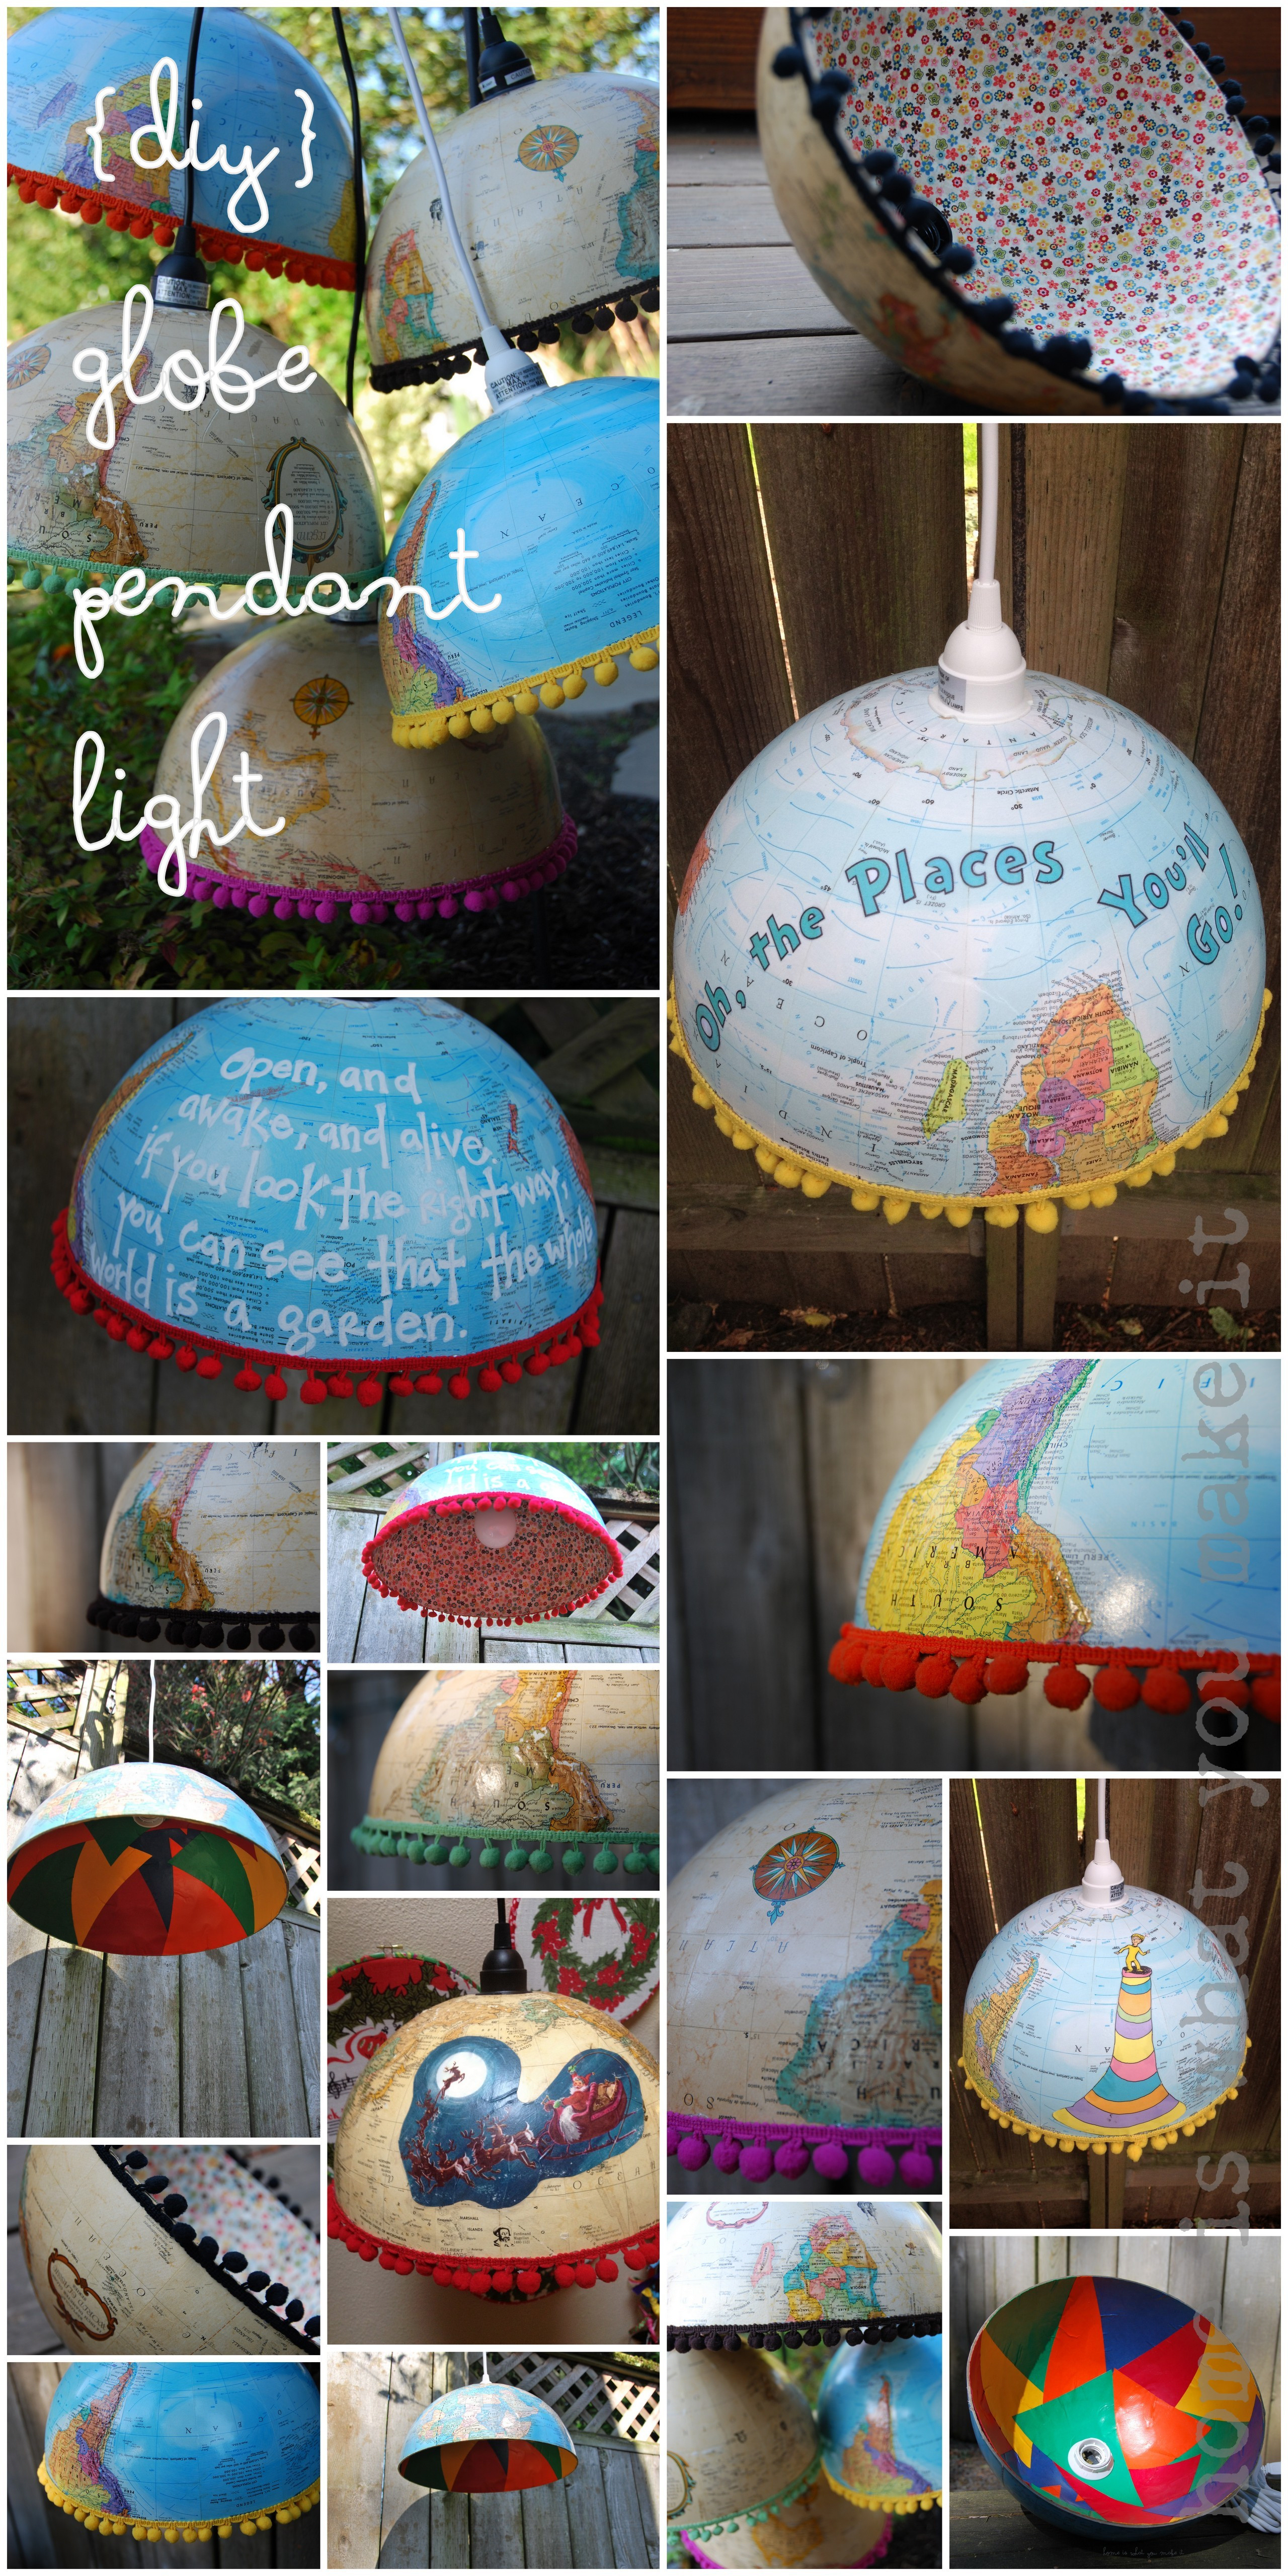 Best ideas about DIY Globe Light
. Save or Pin diy globe pendant light Now.